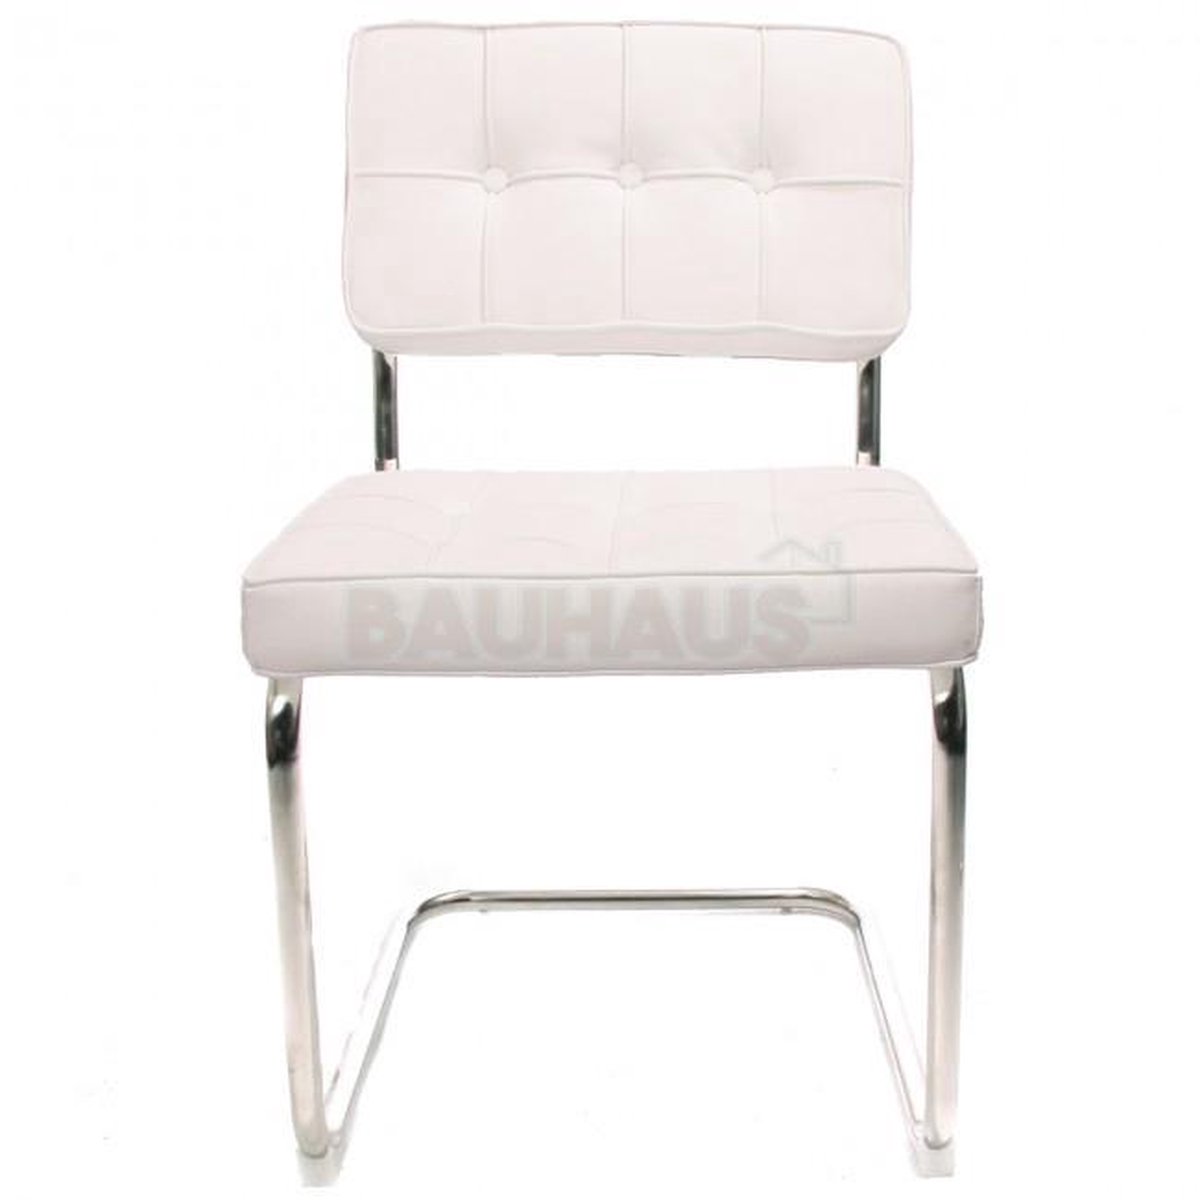 Bauhaus stoel wit | bol.com